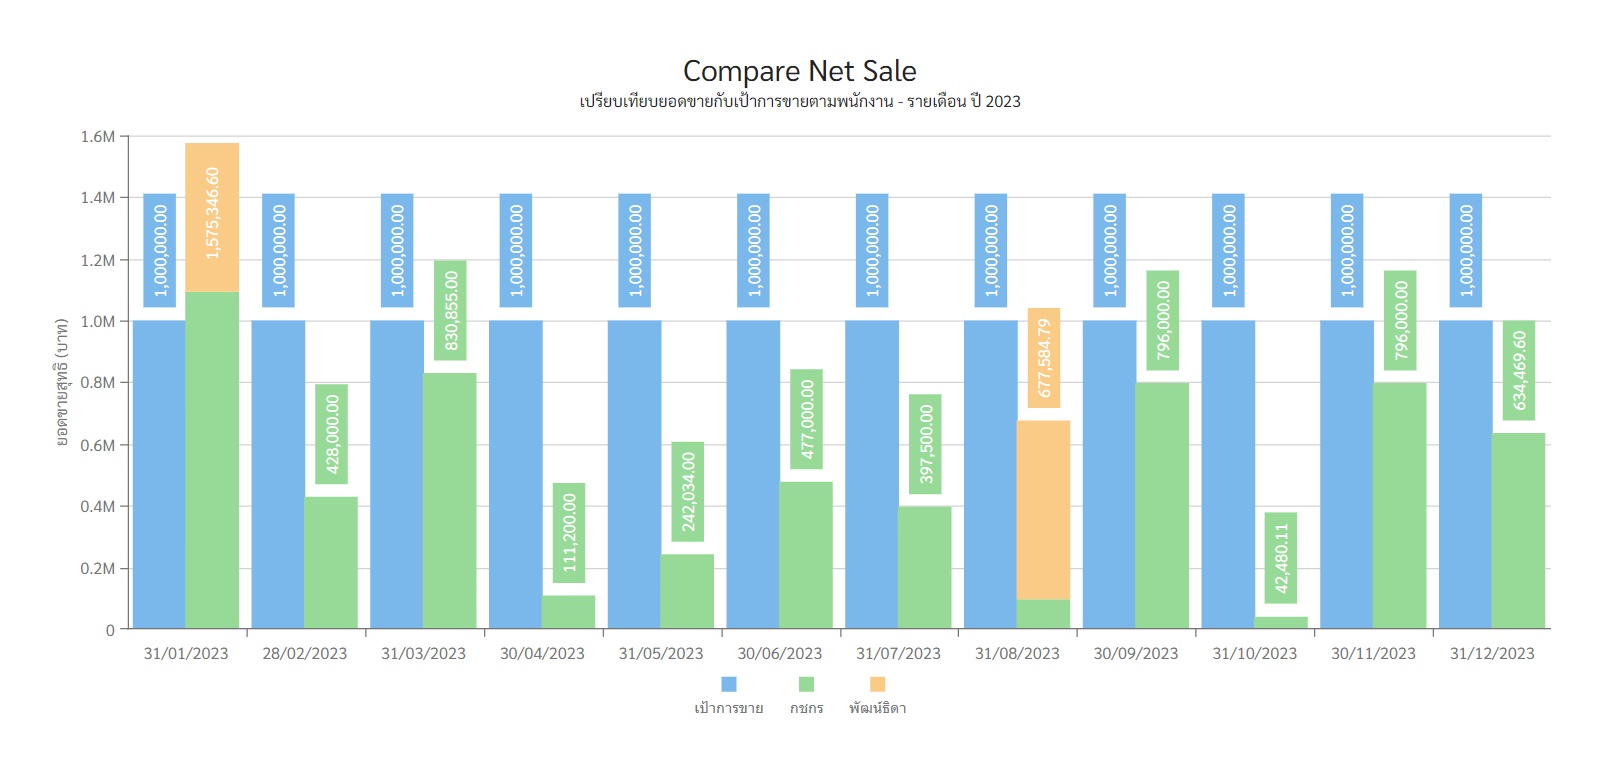 Compare Net Sale เปรียบเทียบยอดขายตามพนักงาน - รายเดือน